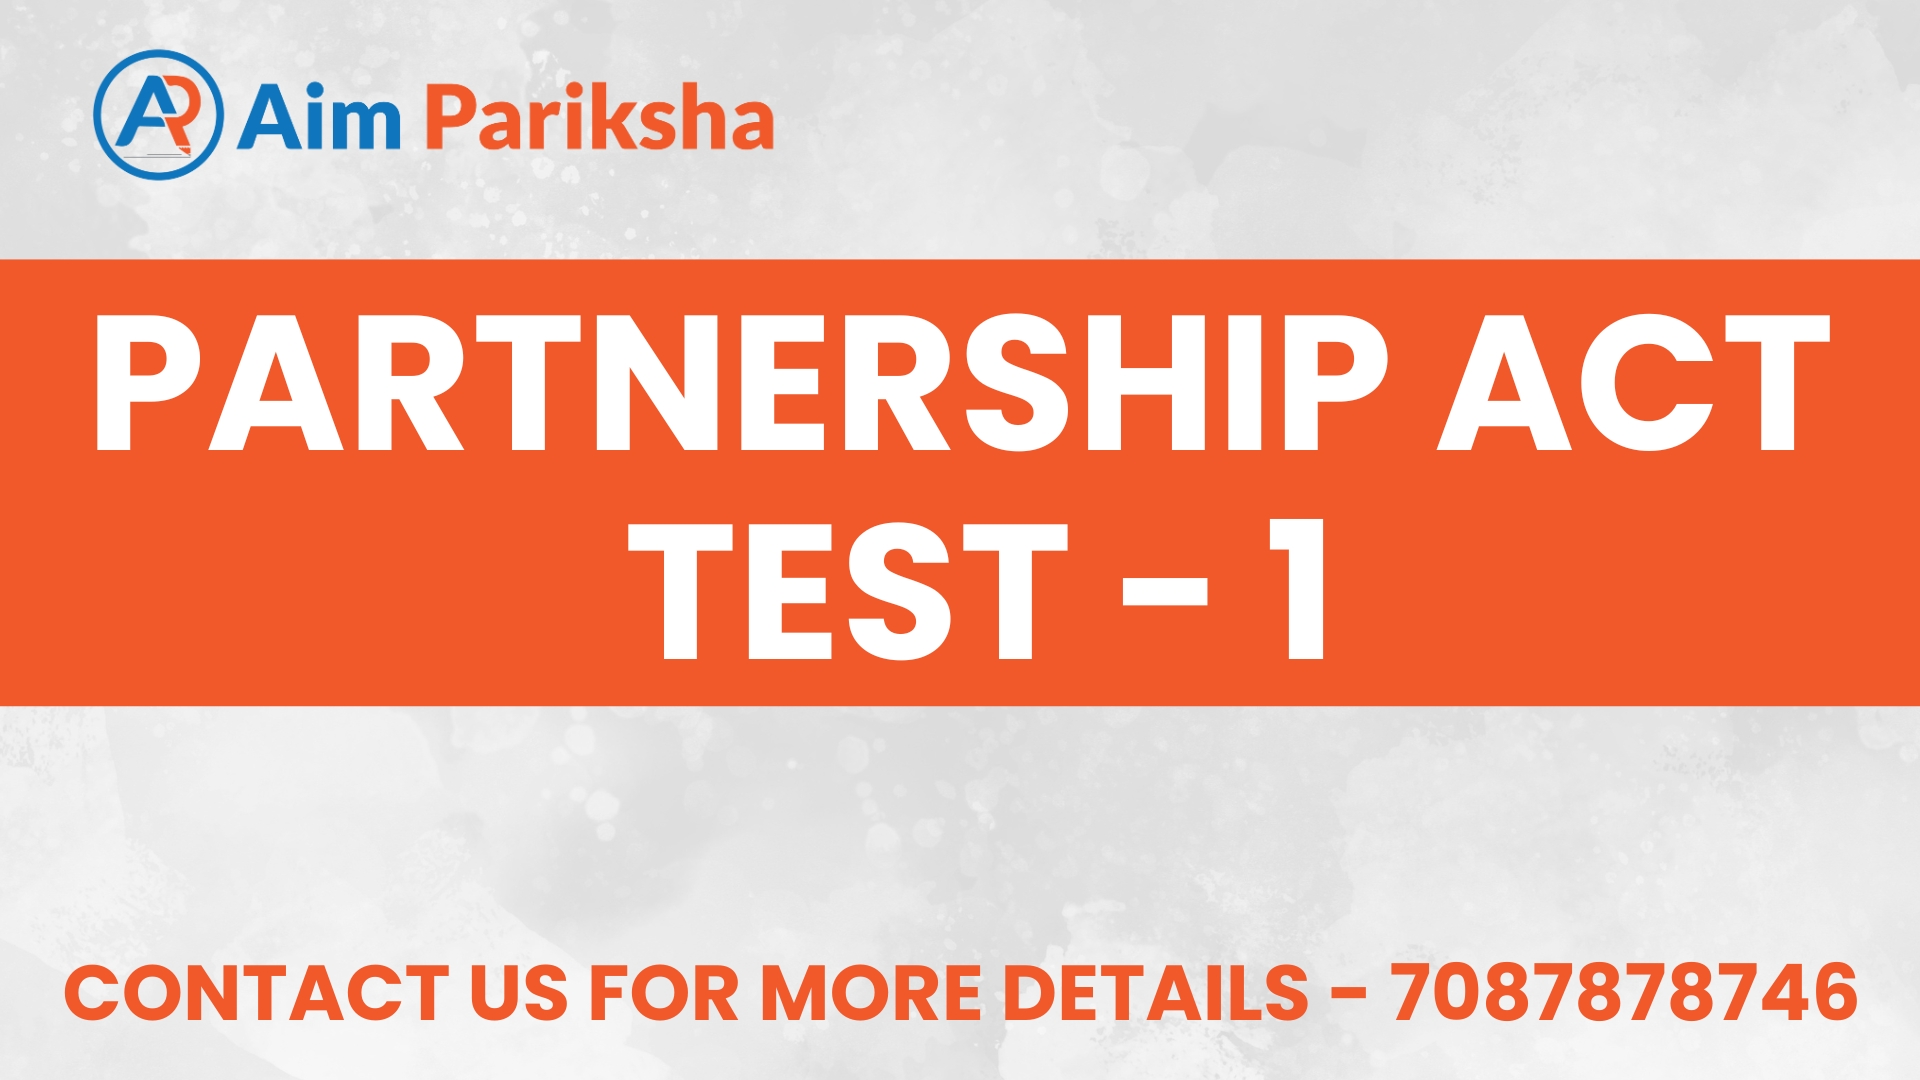 Partnership Act Test - 1